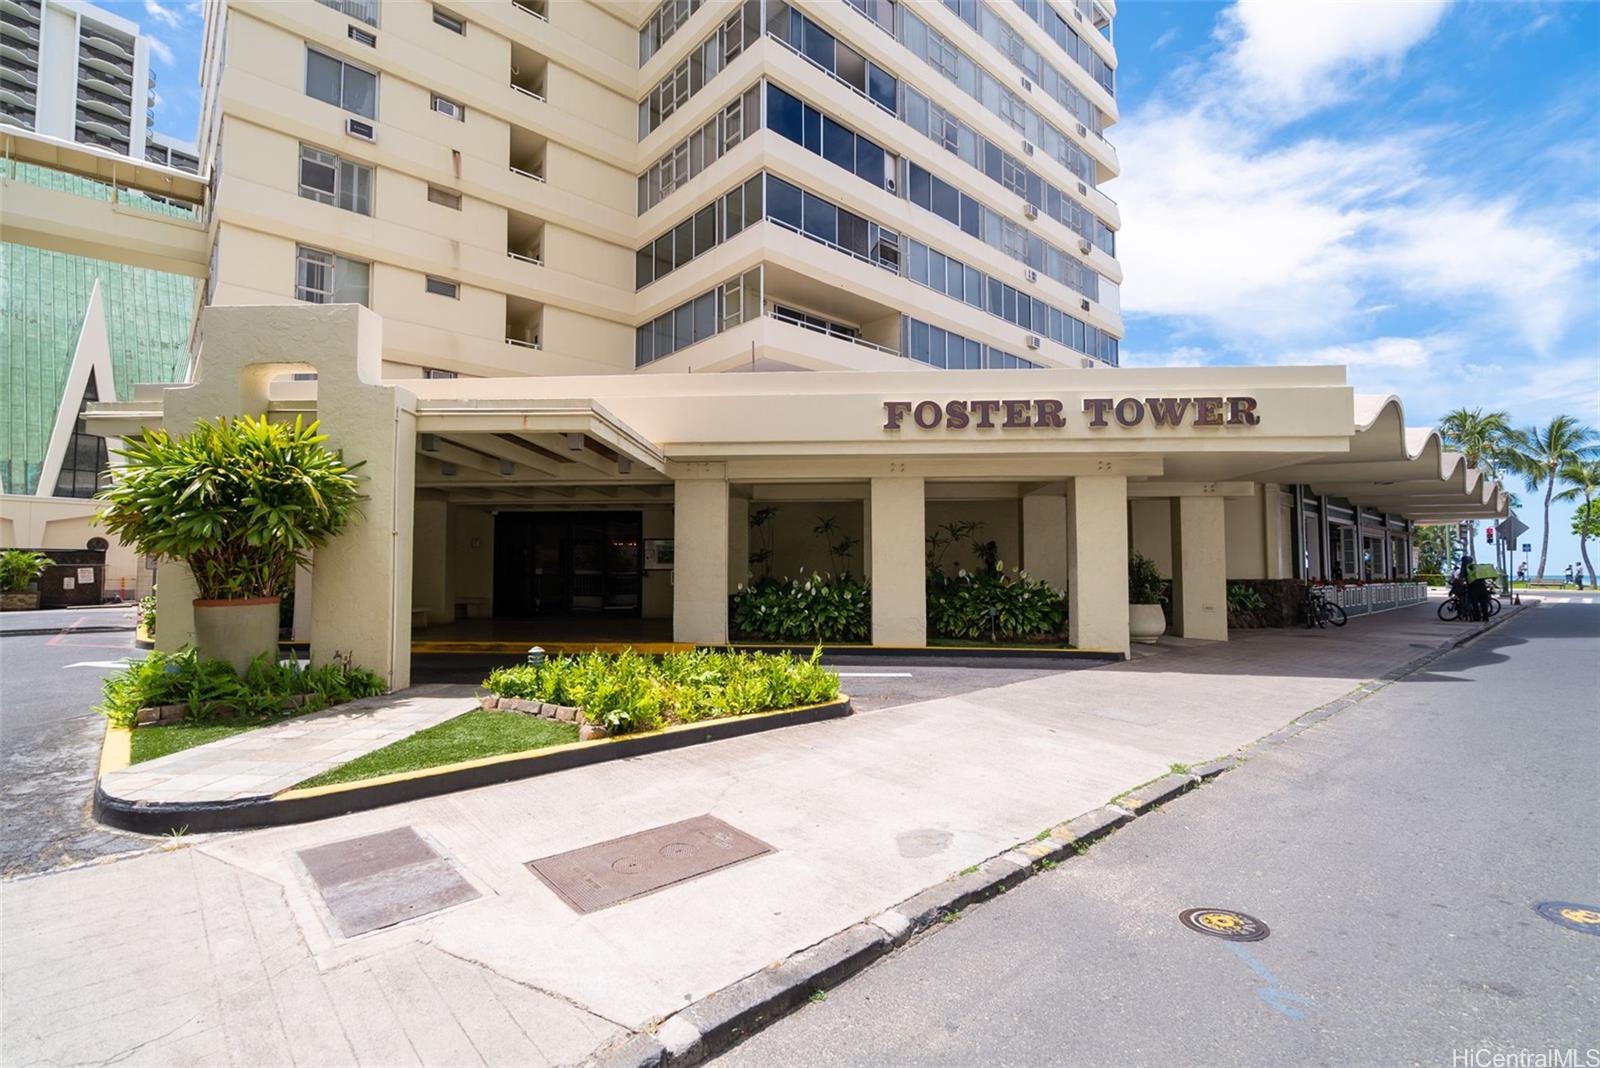 Foster Tower 2500 Kalakaua Avenue  Unit 2103